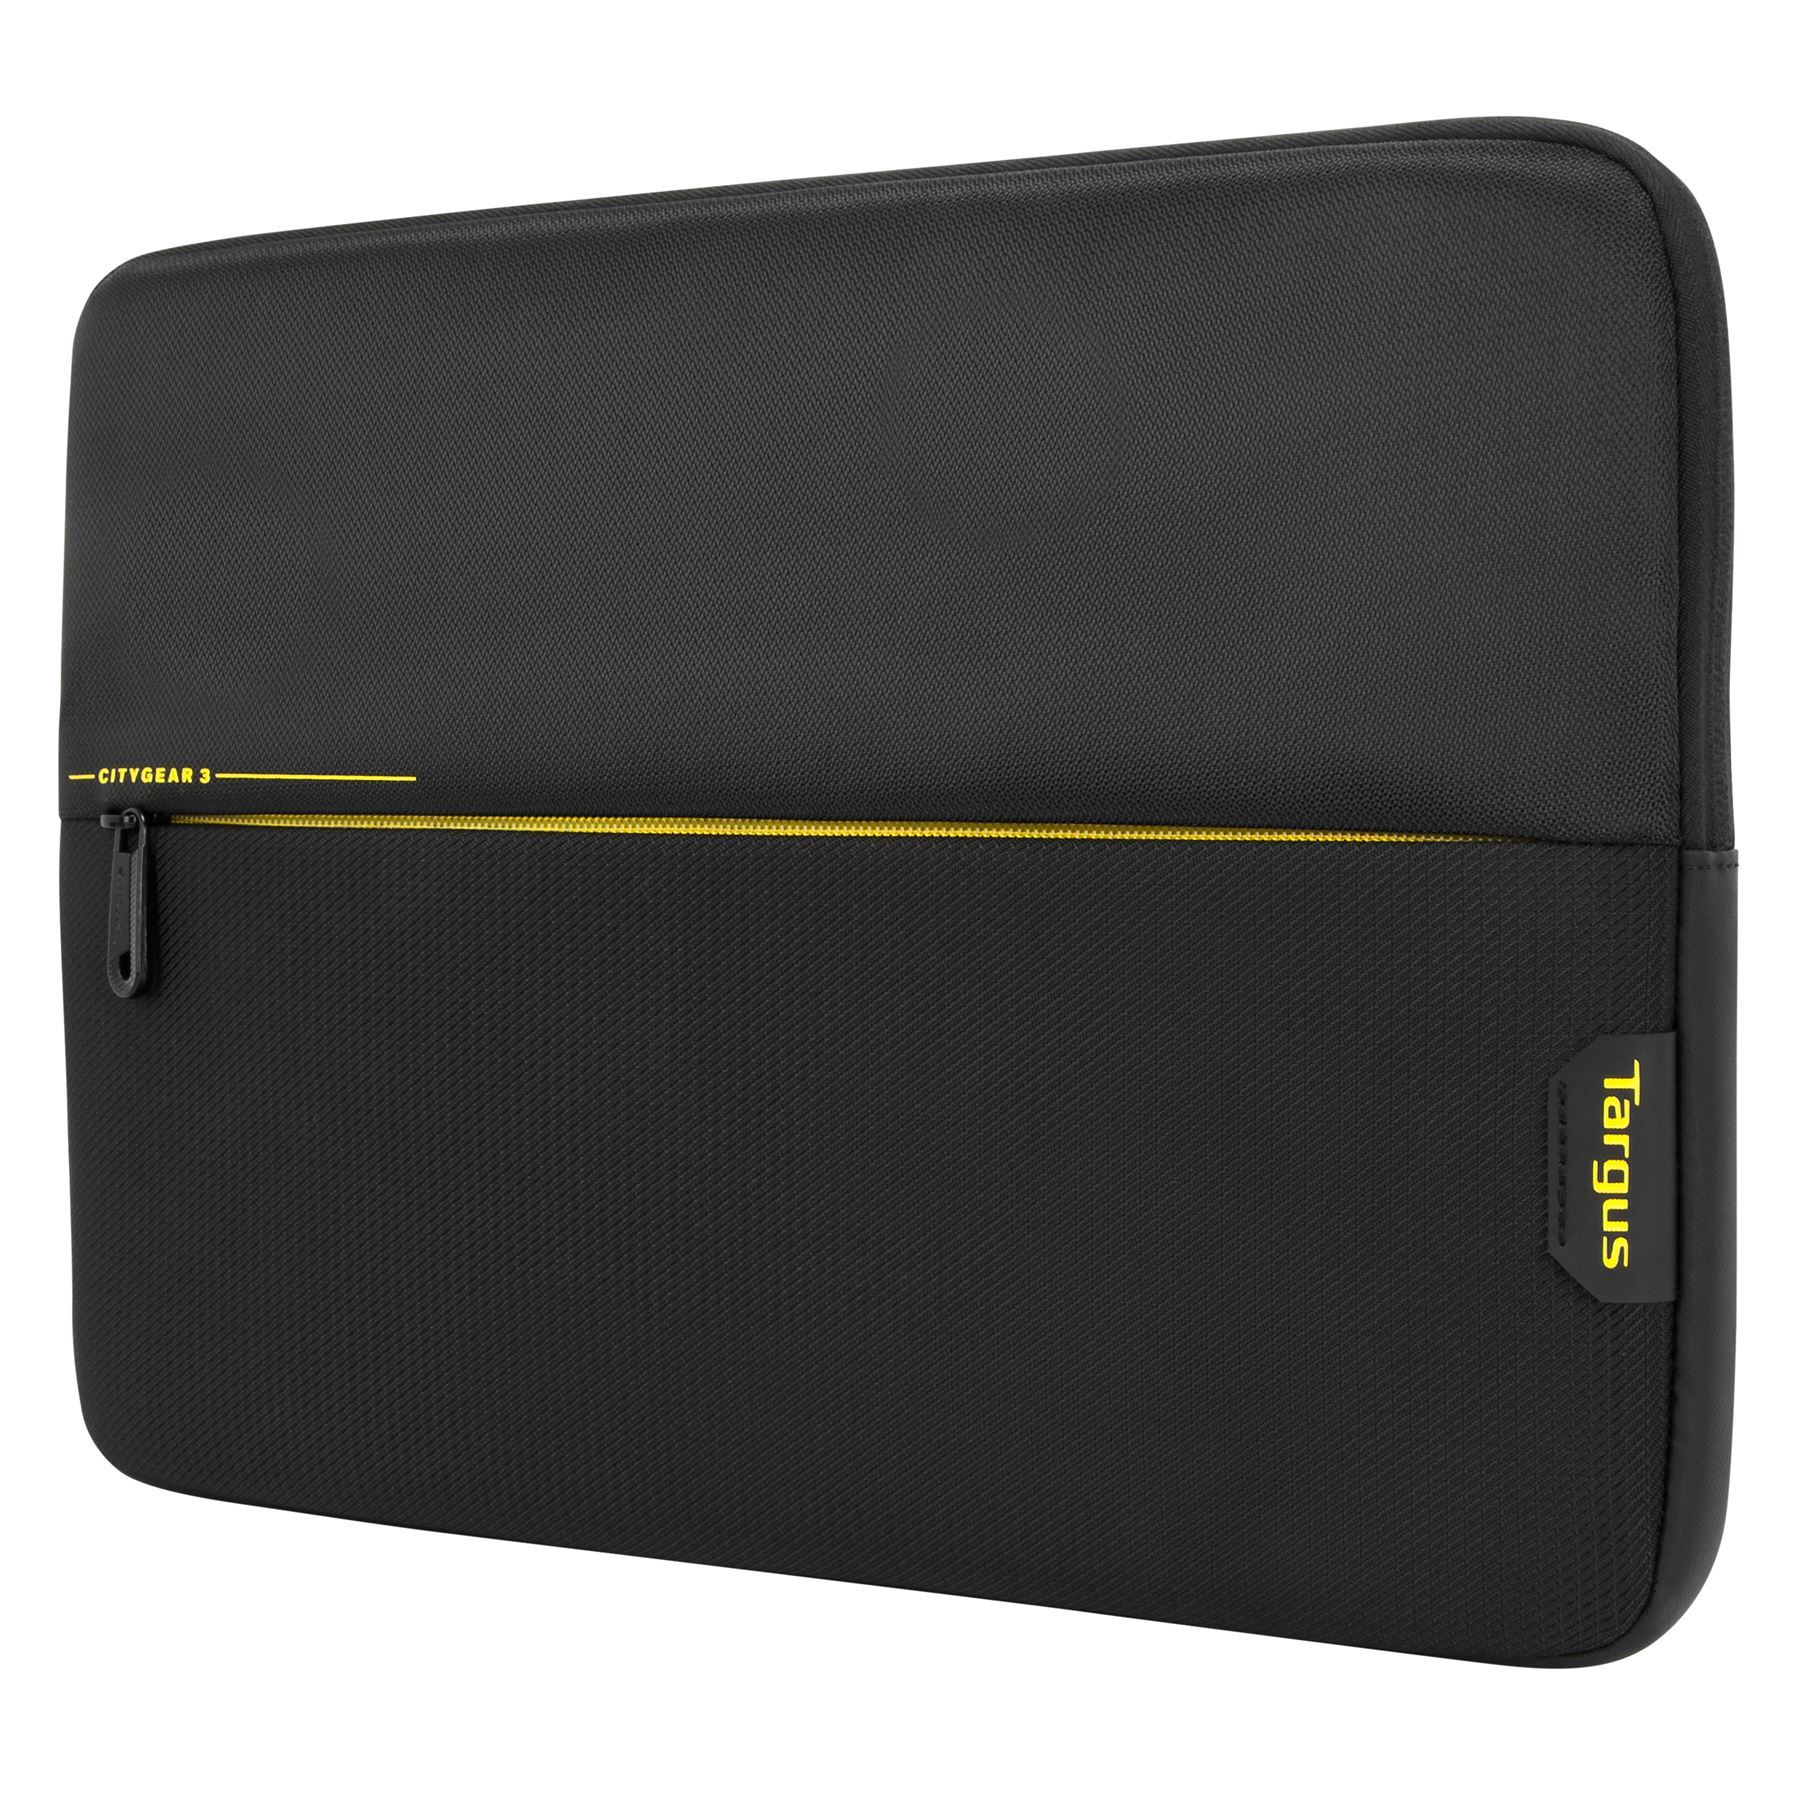 Targus CityGear 3 39.6 cm (15.6") Sleeve case Black, Yellow